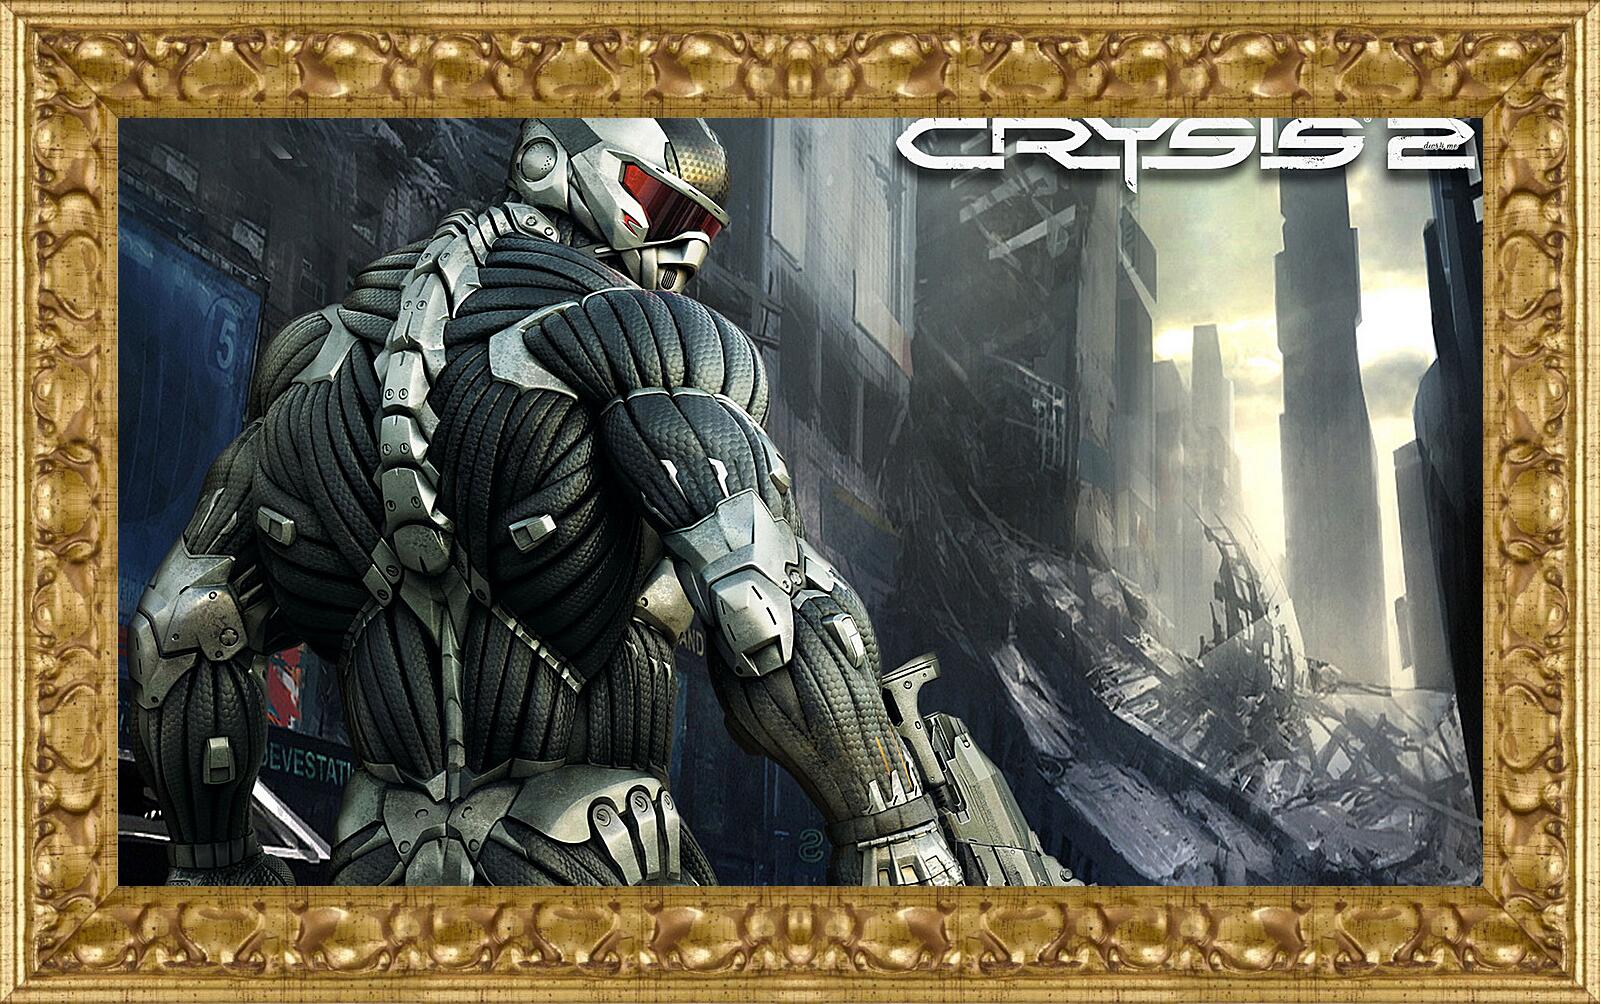 Картина в раме - Crysis 2